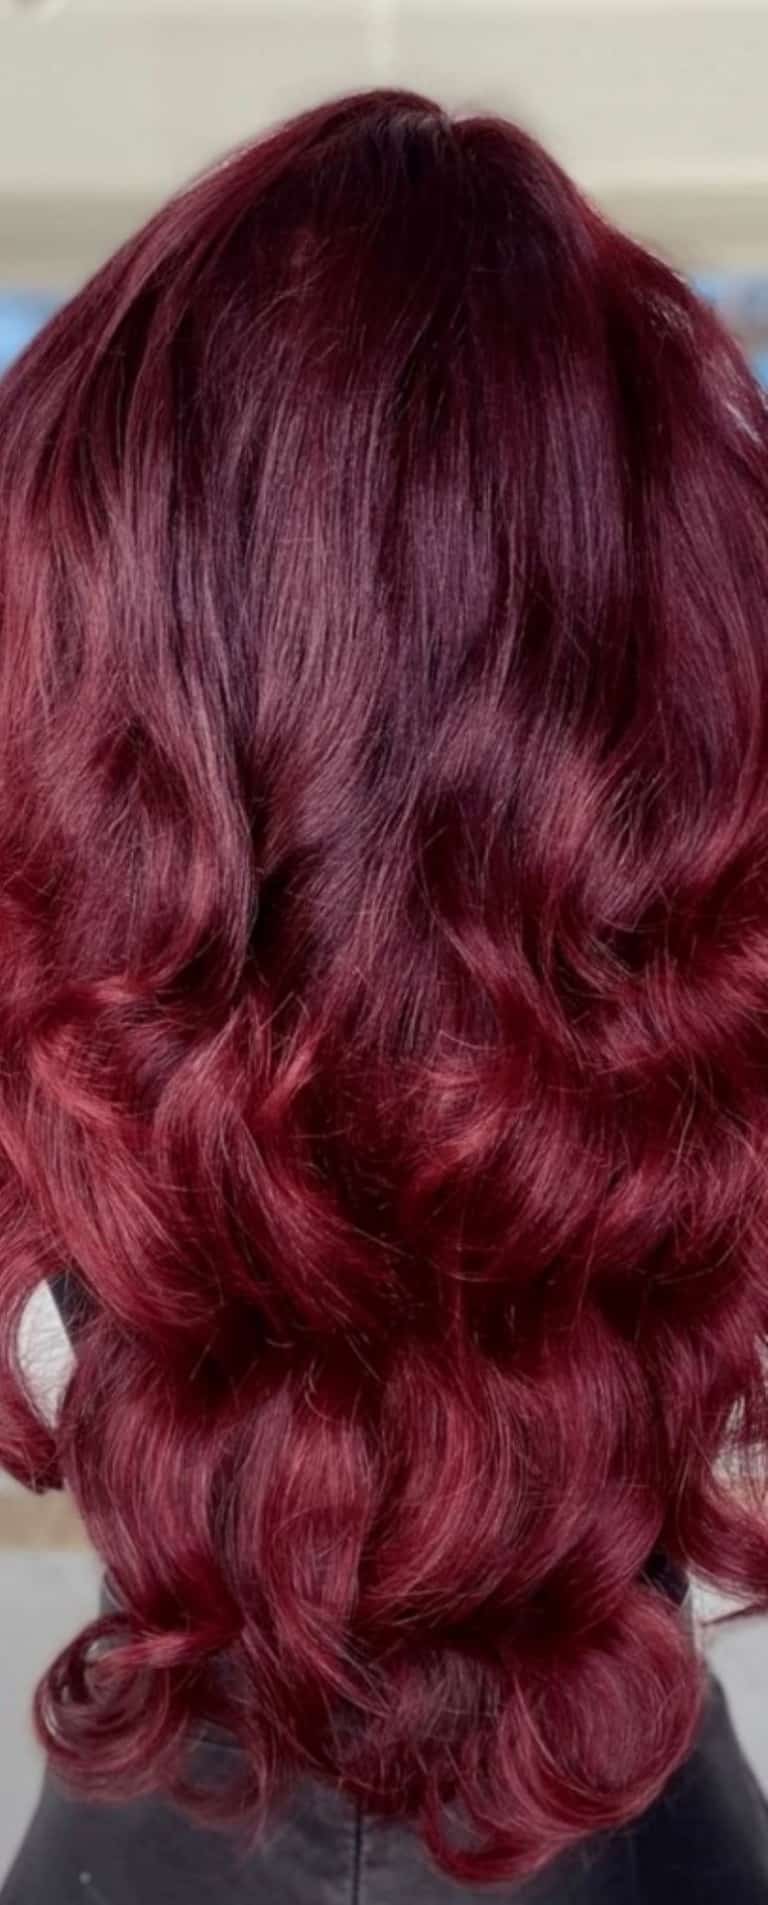 Hairdreams hair in Bordeaux red